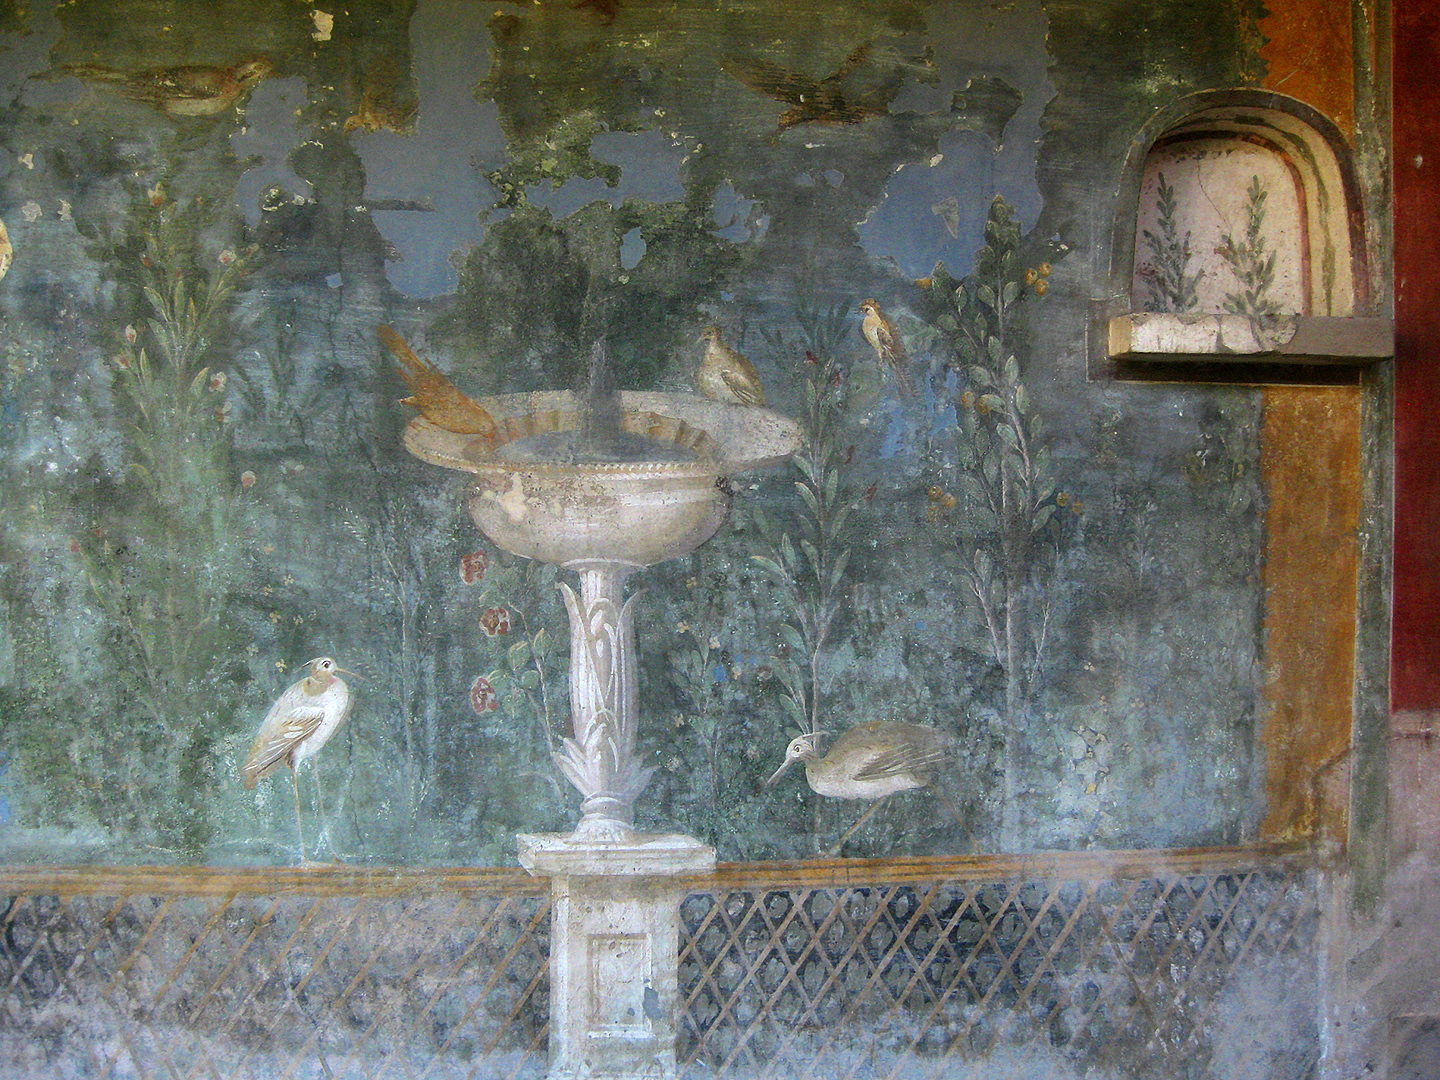 Huis van Venus, Pompeii, Campani, Itali, House of Venus, Pompeii, Campania, Italy